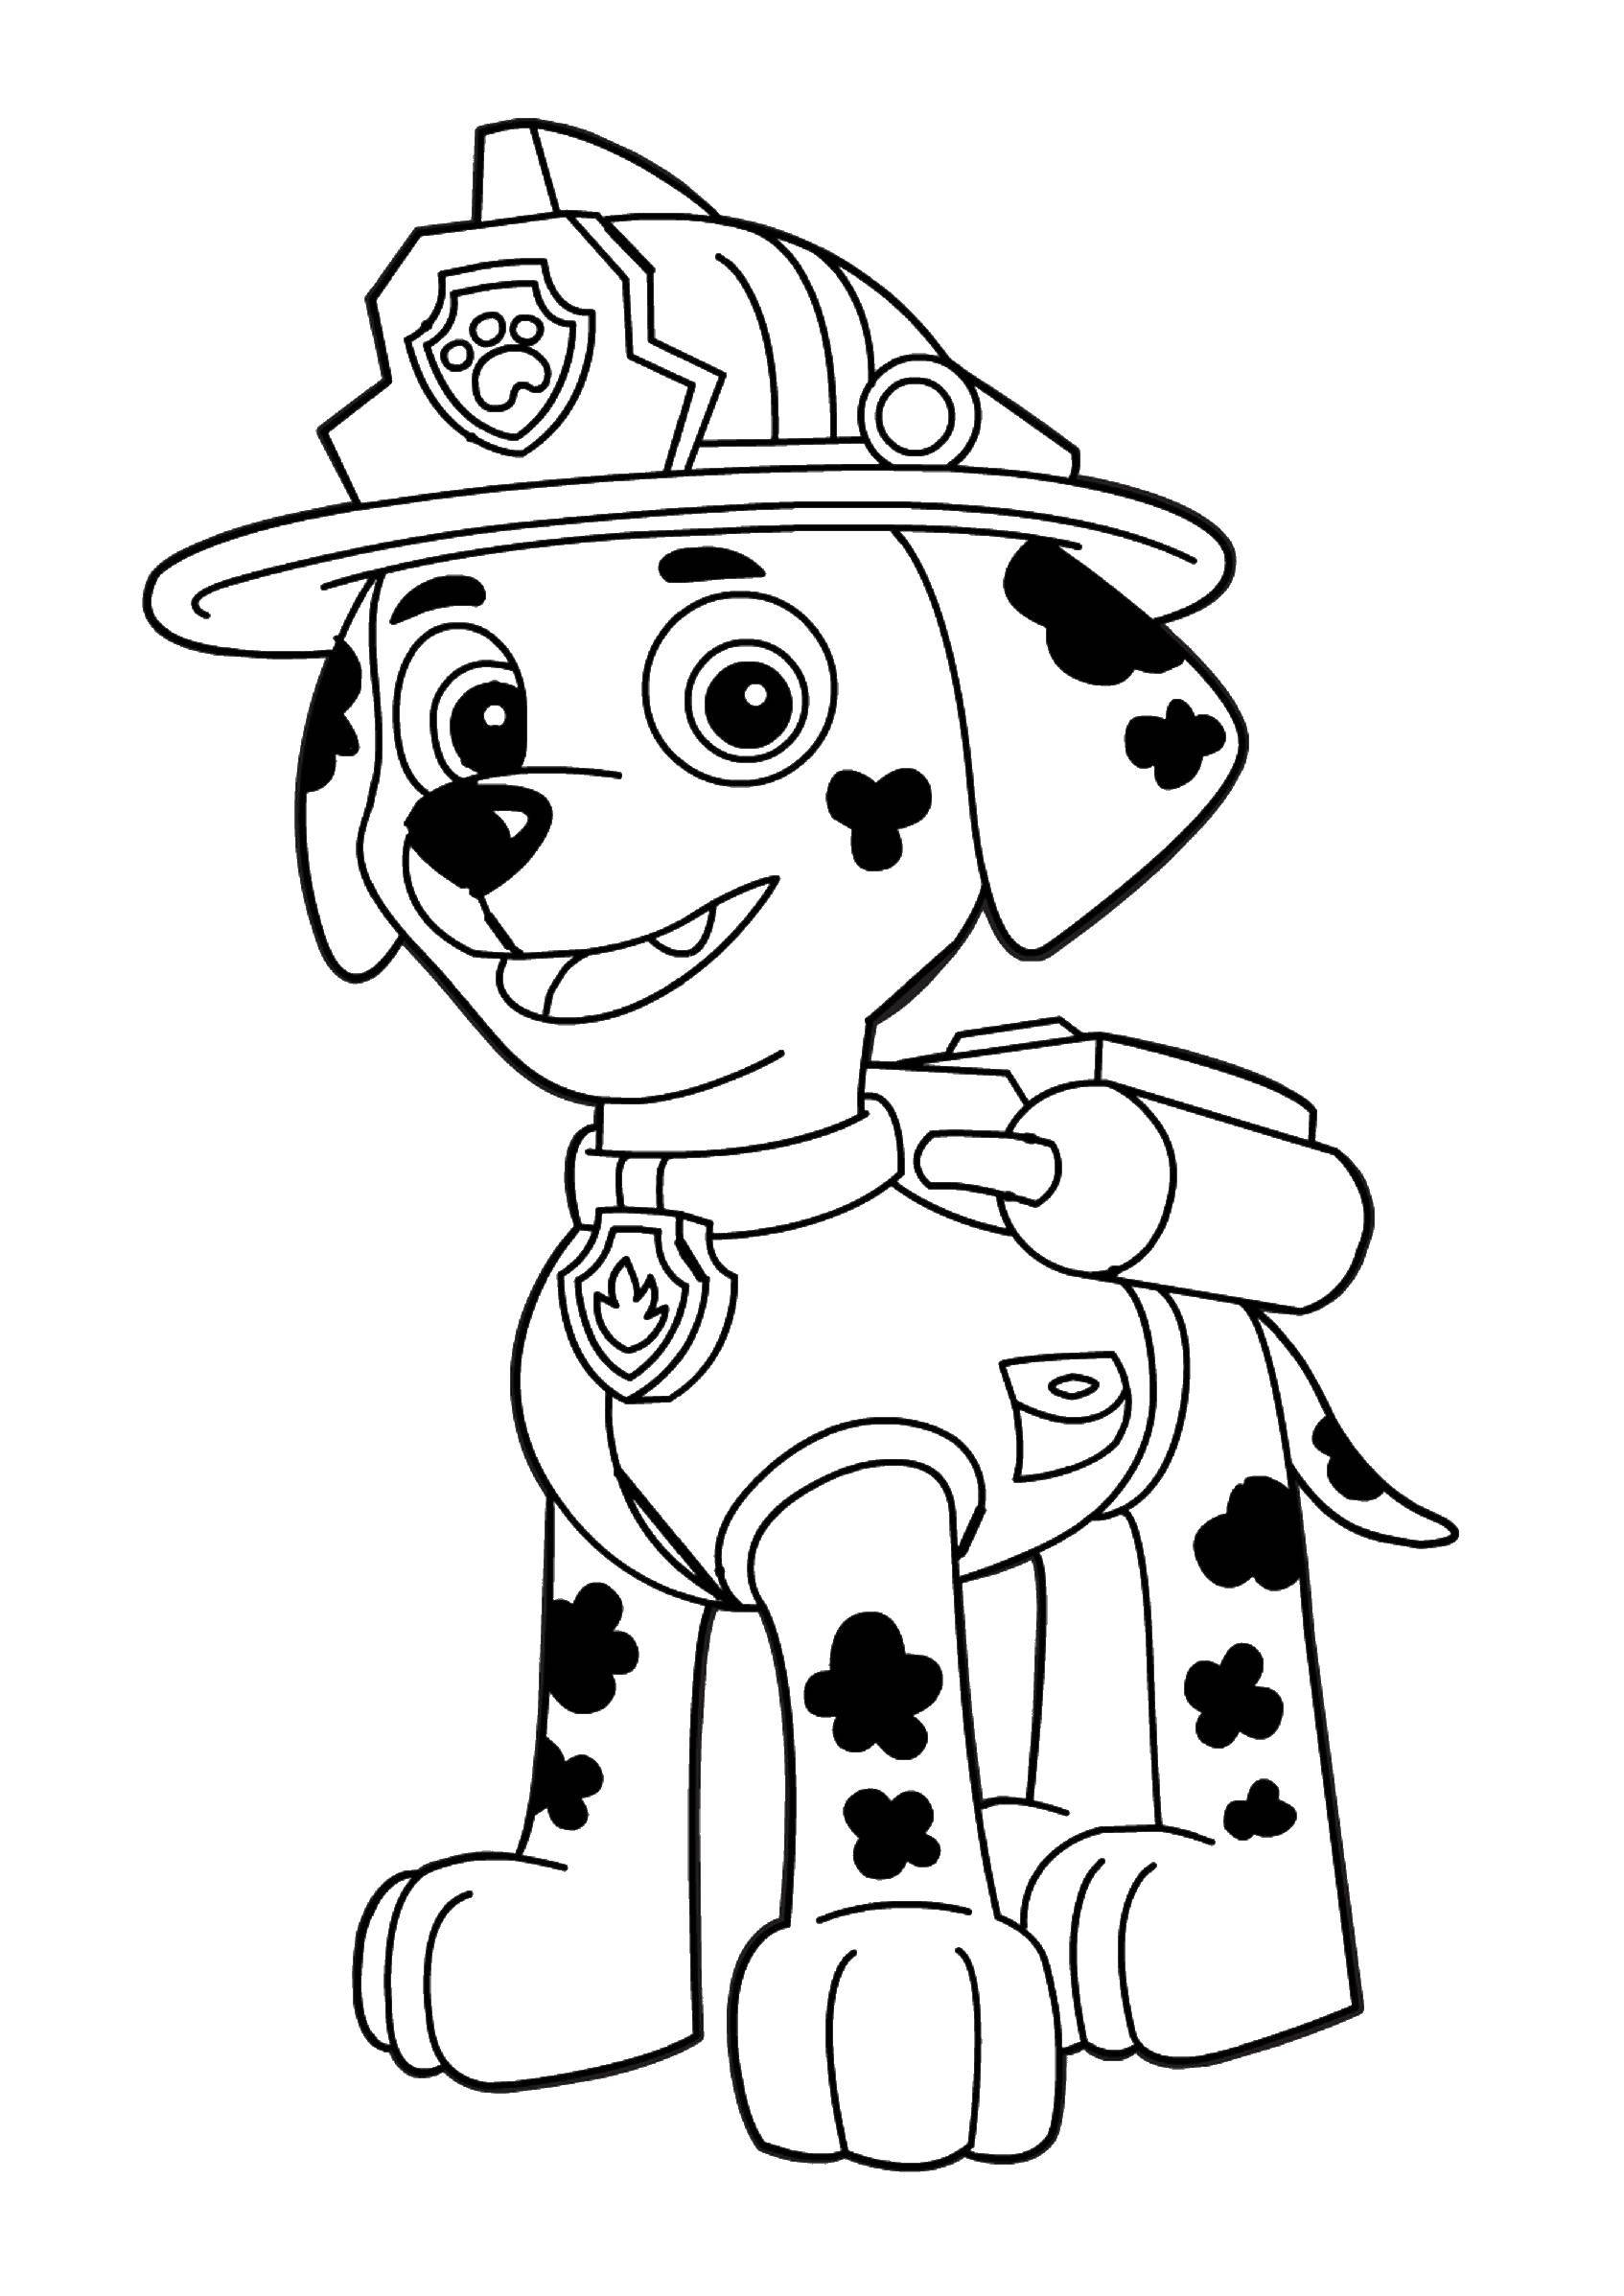 Coloring Dalmatians Marshal. Category paw patrol. Tags:  Paw patrol.